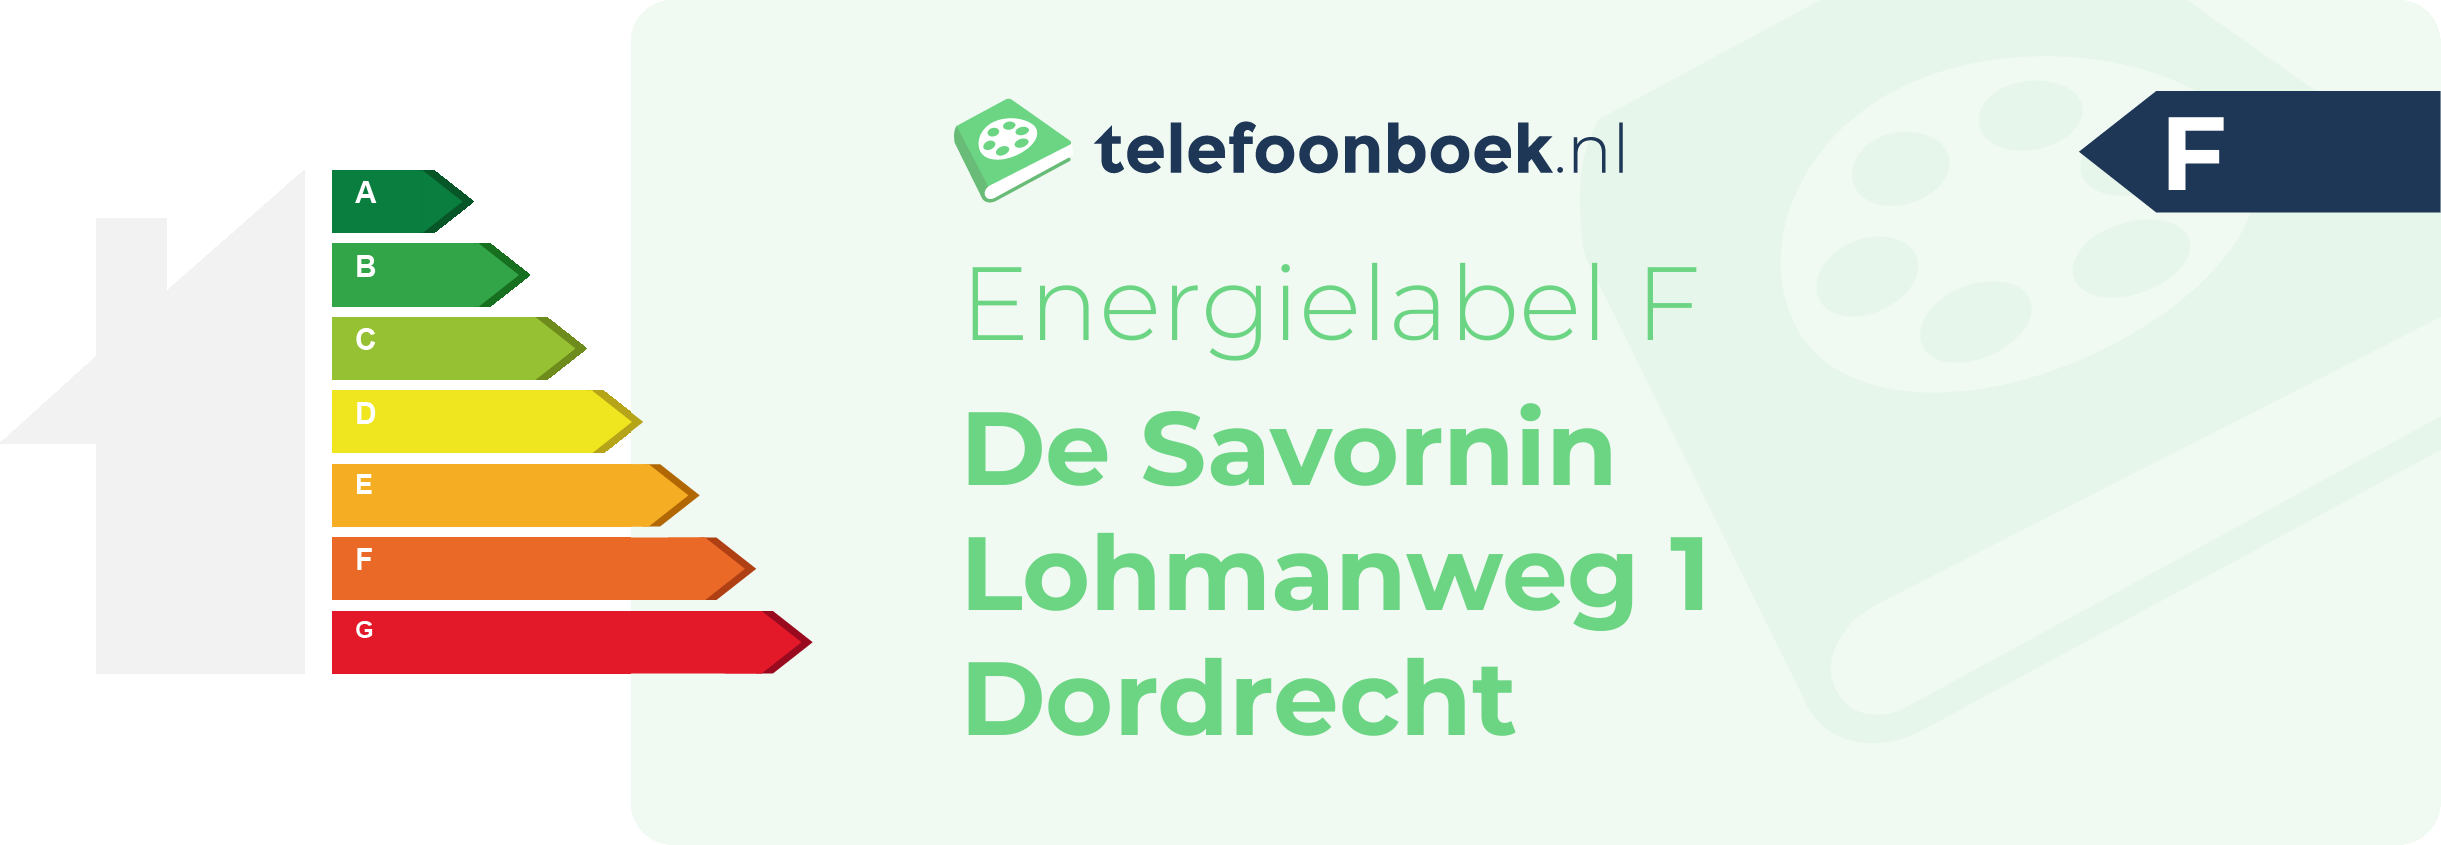 Energielabel De Savornin Lohmanweg 1 Dordrecht